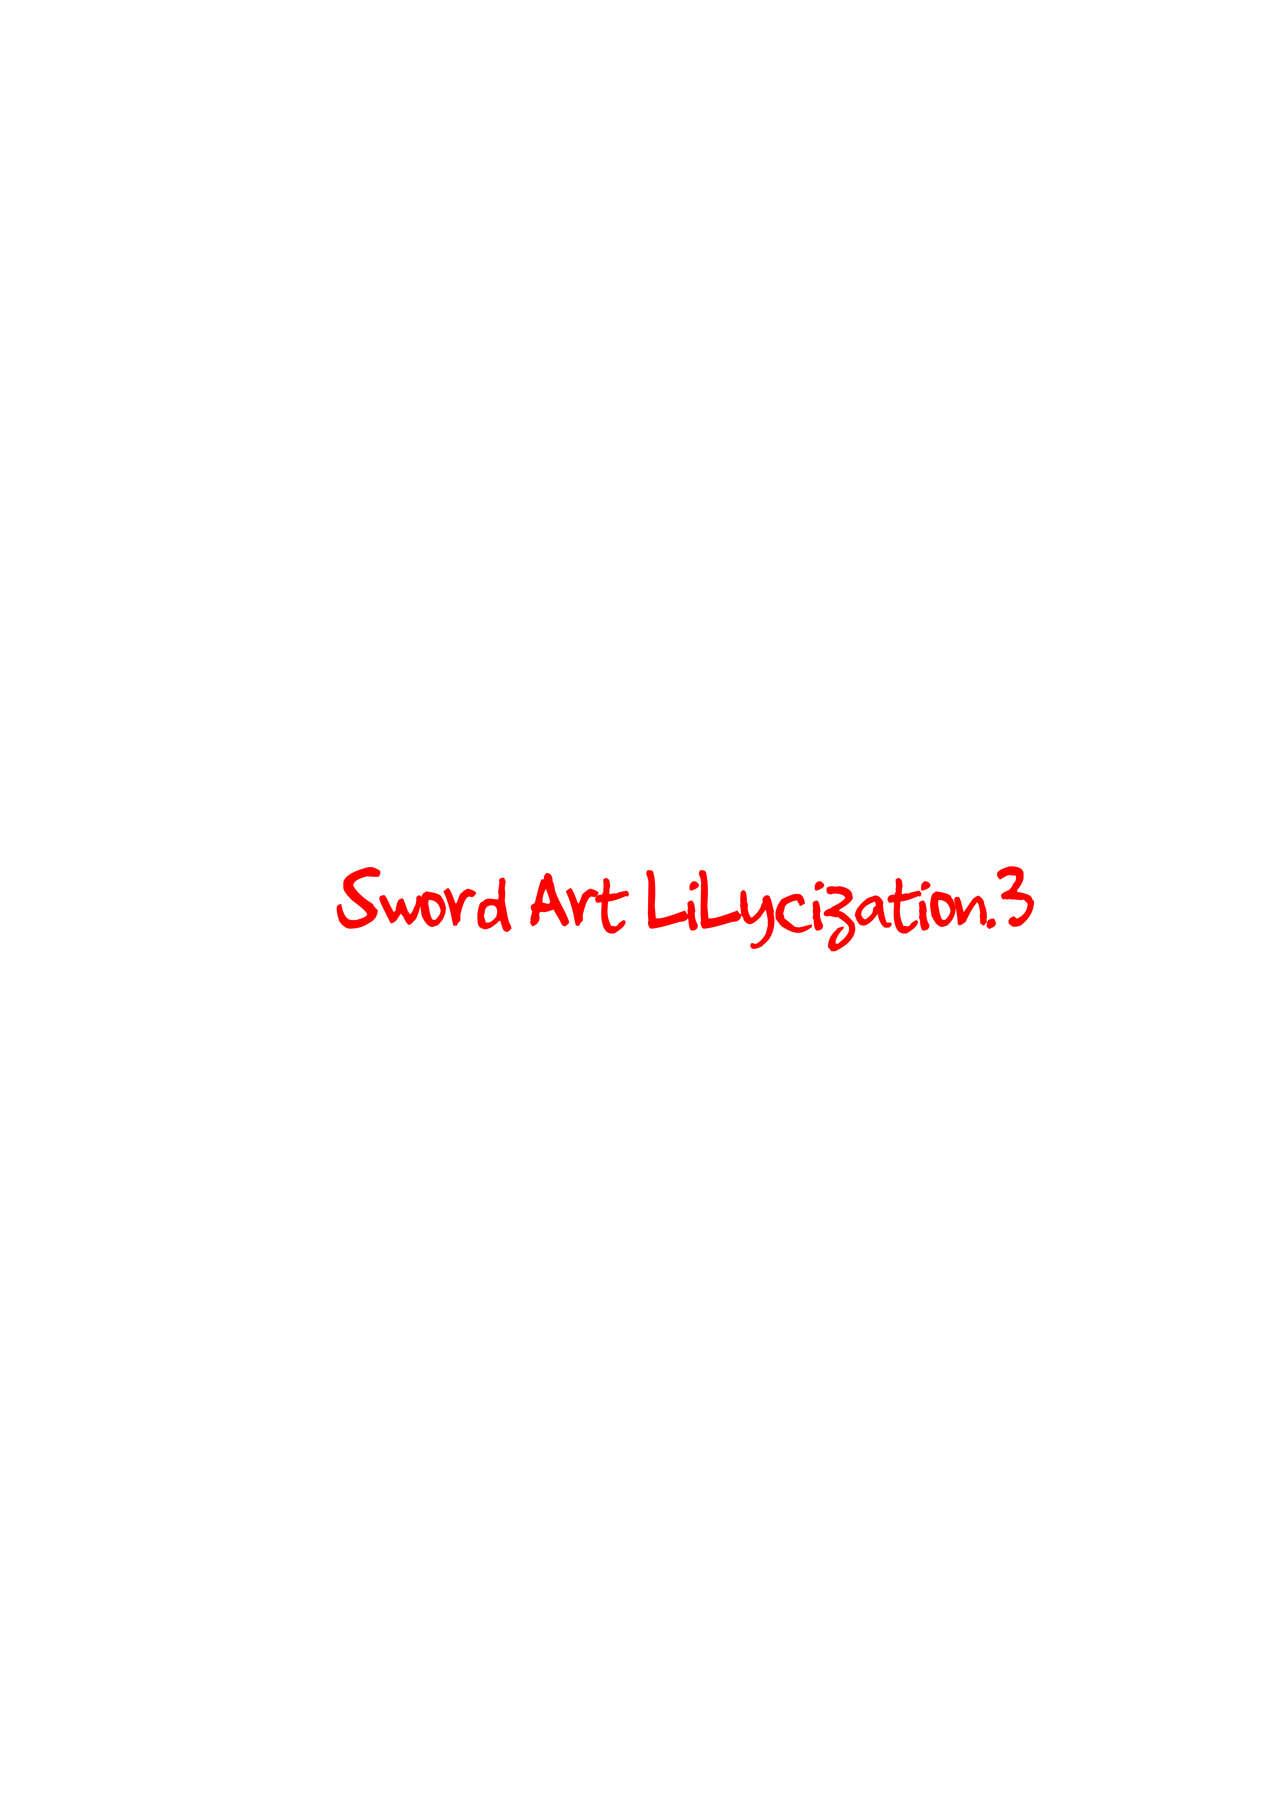 Hetero Sword Art Lilycization.3 - Sword art online Red Head - Page 2